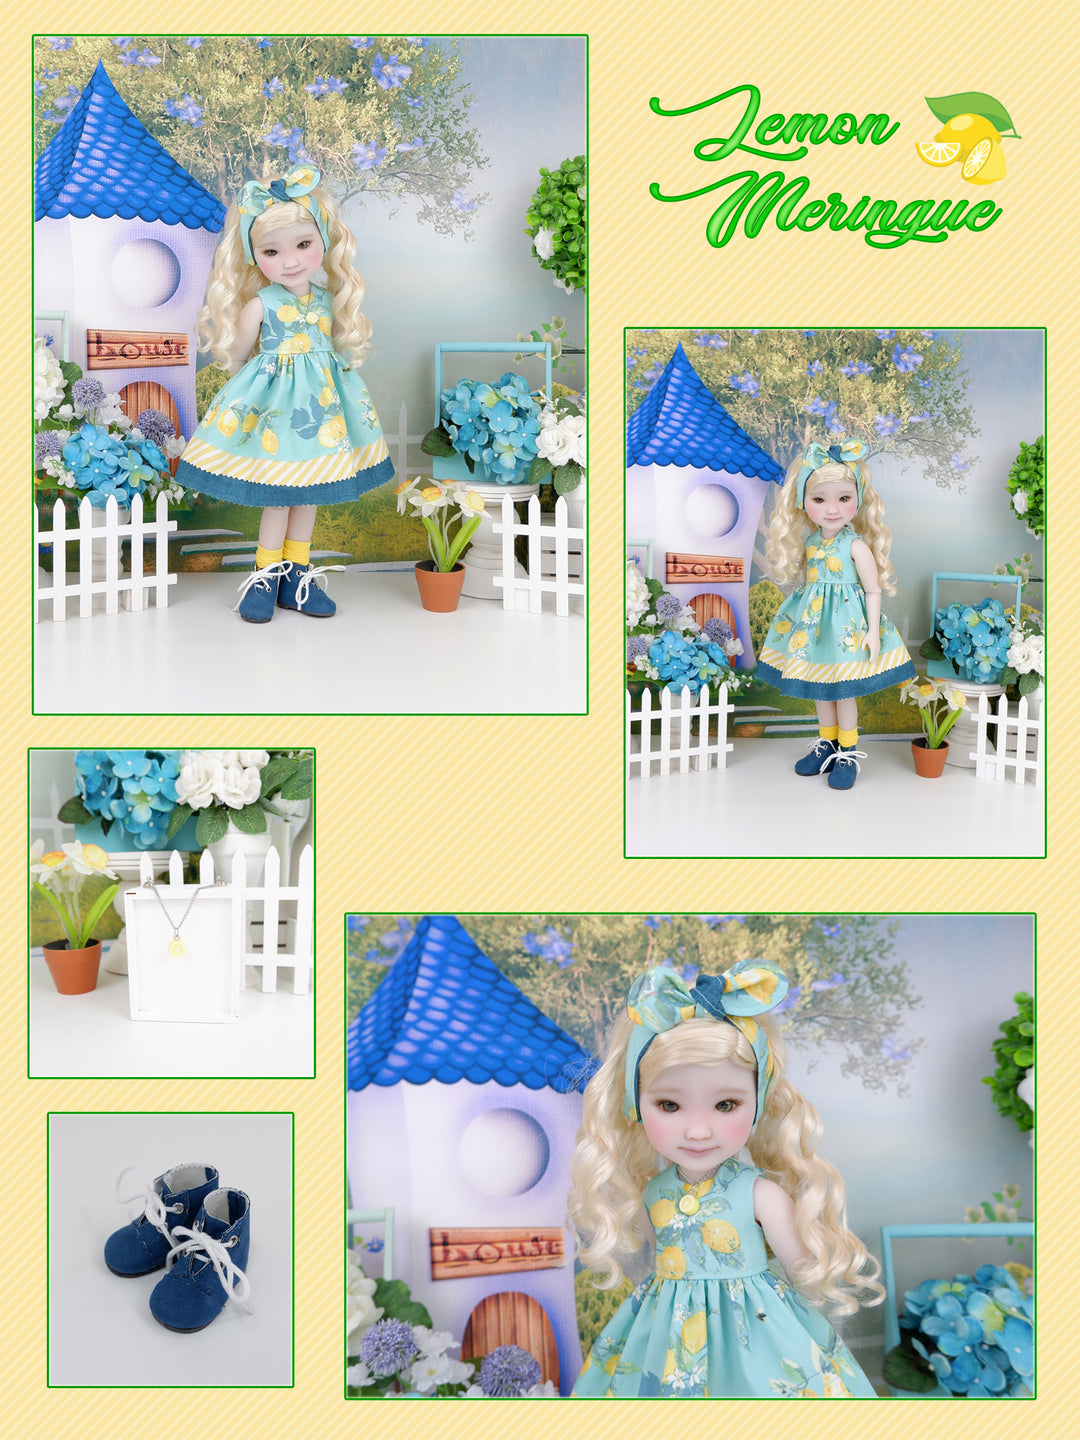 Lemon Meringue - custom Strawberry Shortcake character Ruby Red Fashion Friend doll & wardrobe